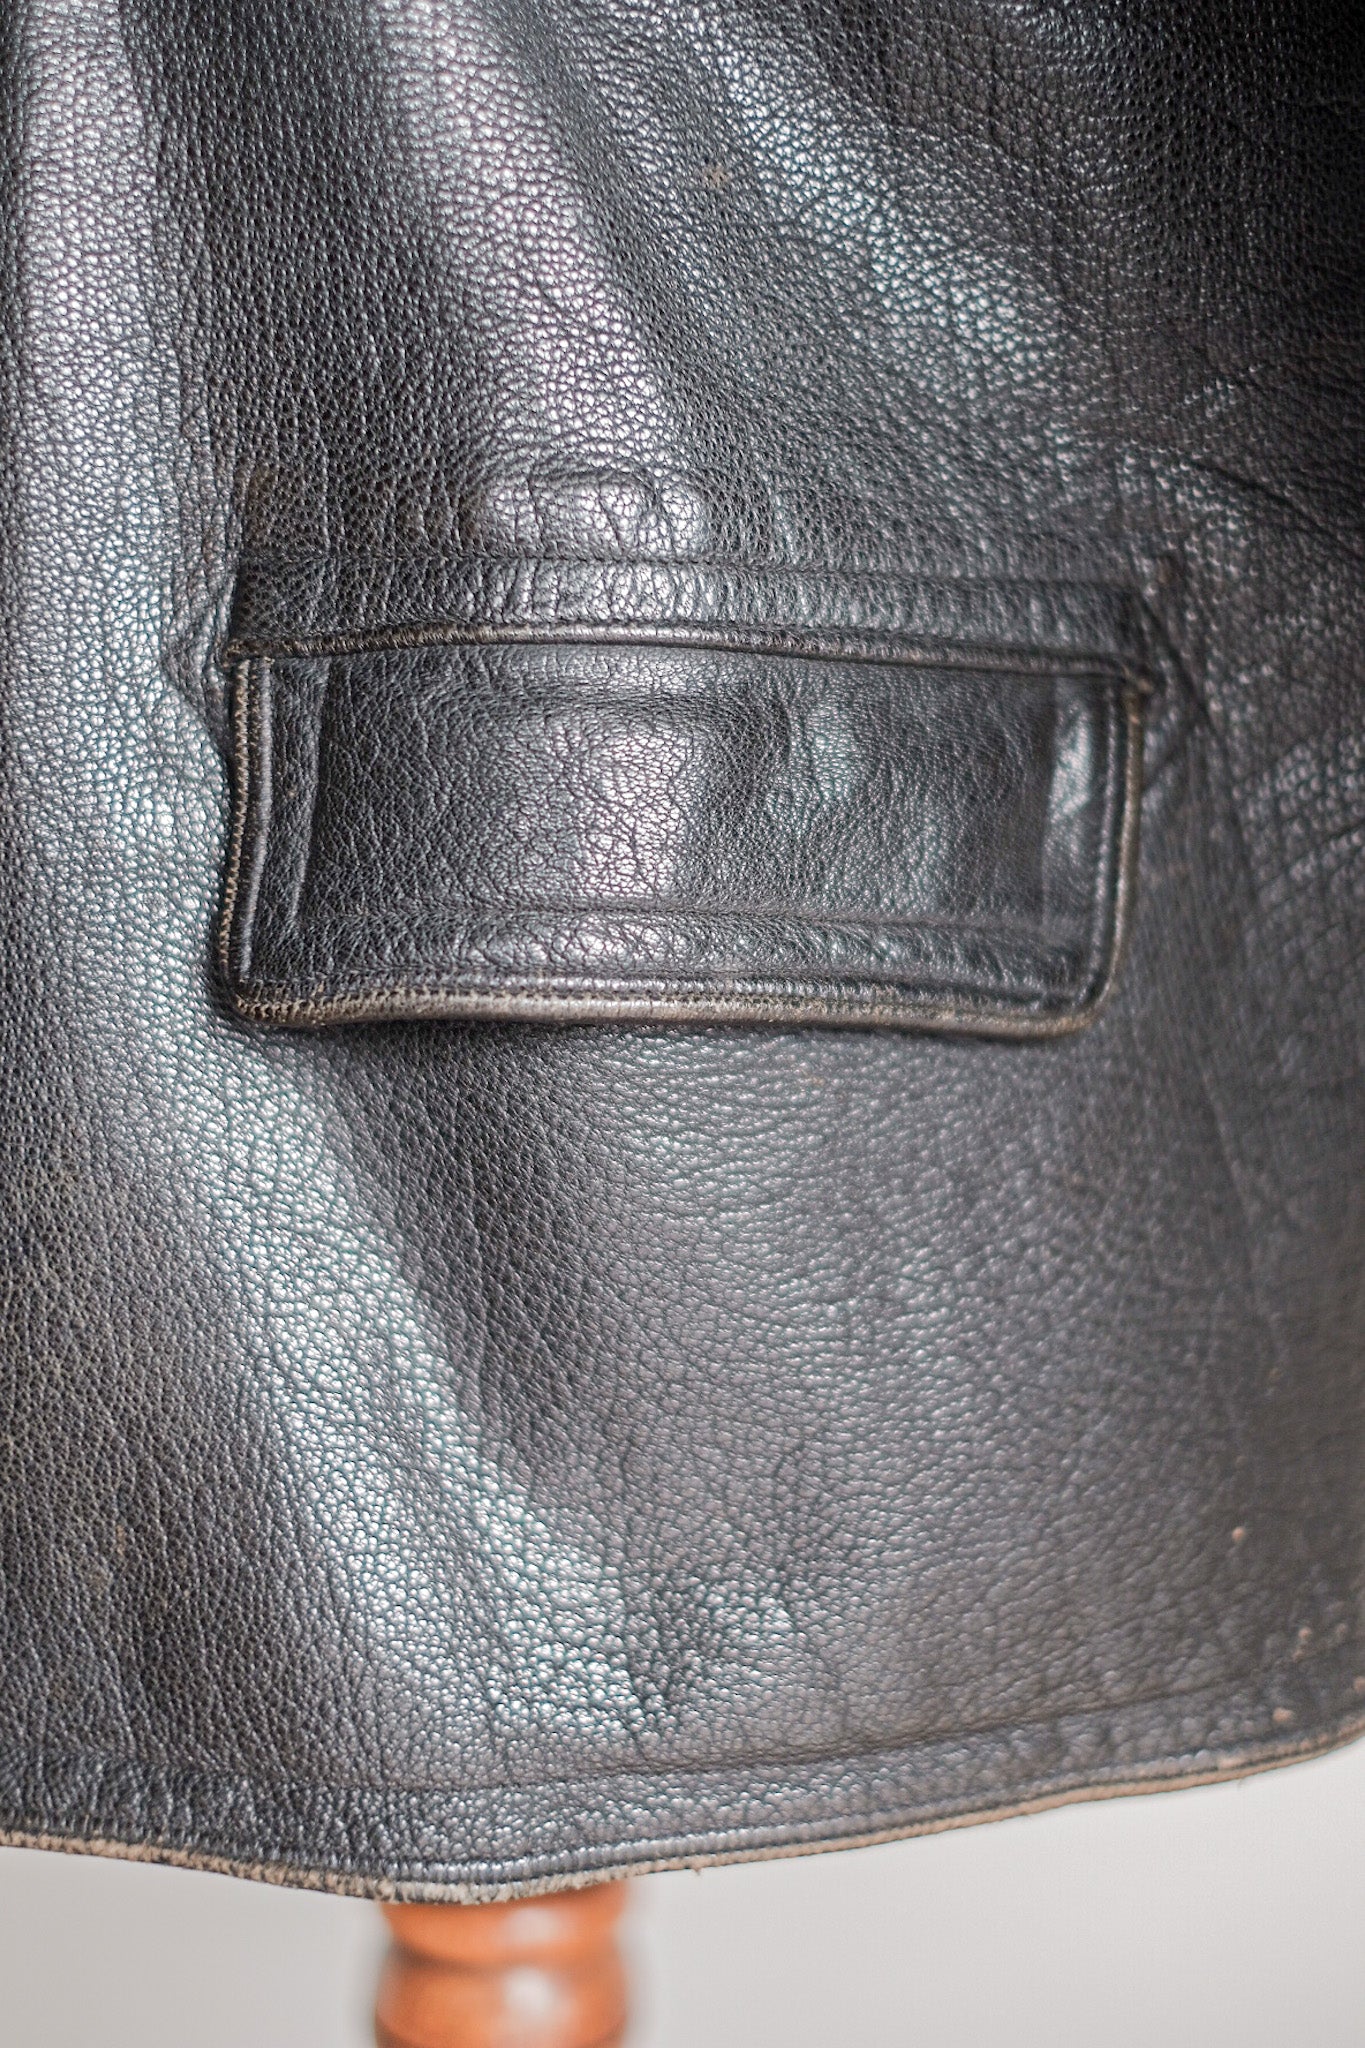 【~40's】Swedish Vintage Double Breasted Leather Jacket